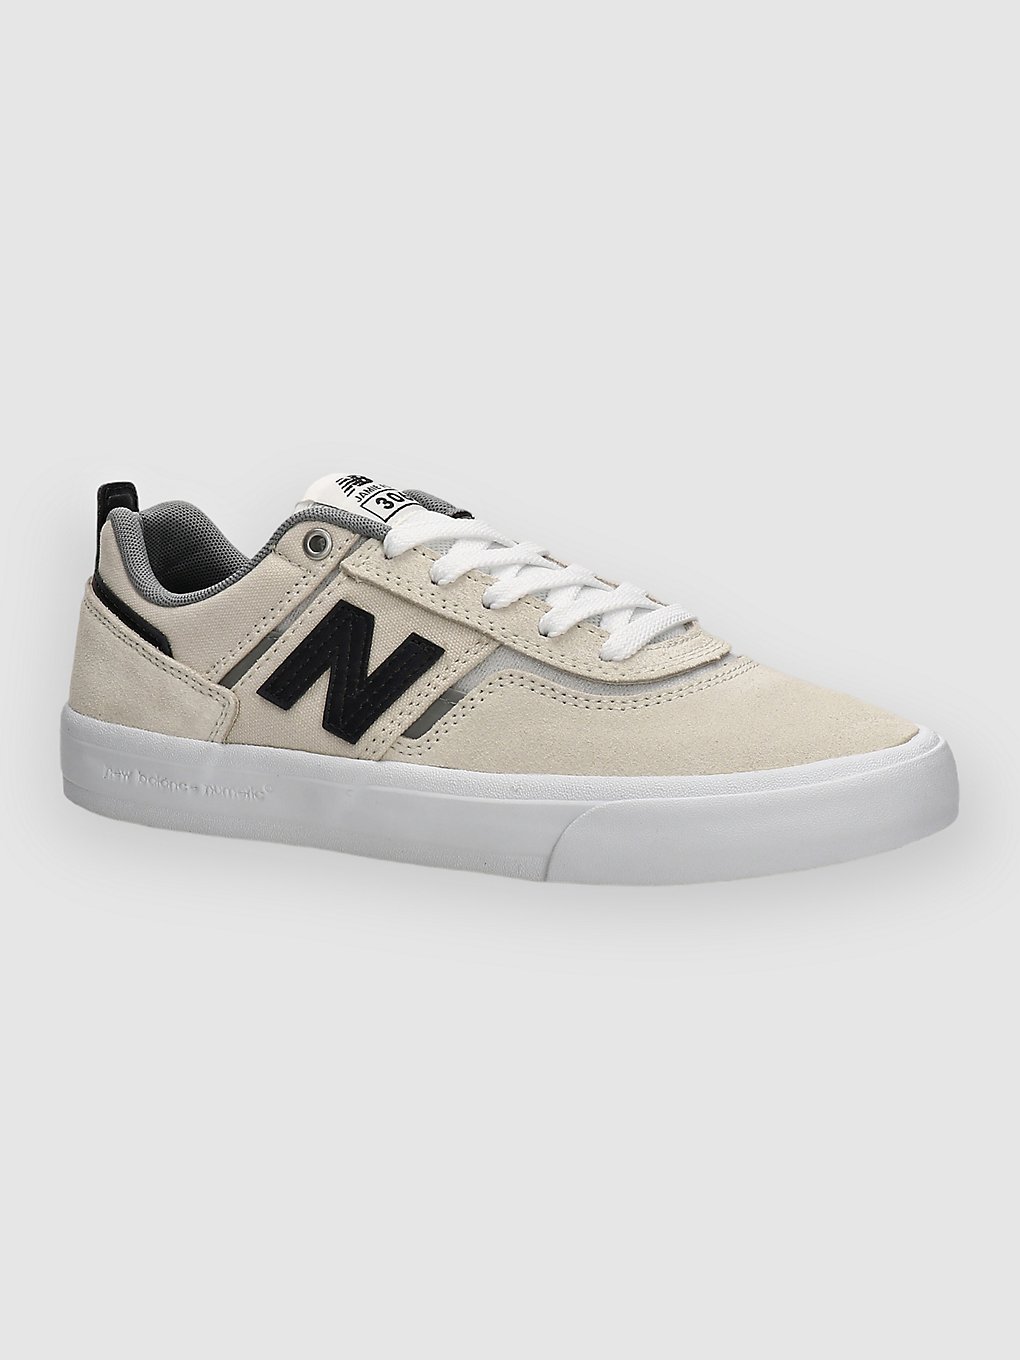 New Balance Numeric 306 Jamie Foy Chaussures de skate blanc